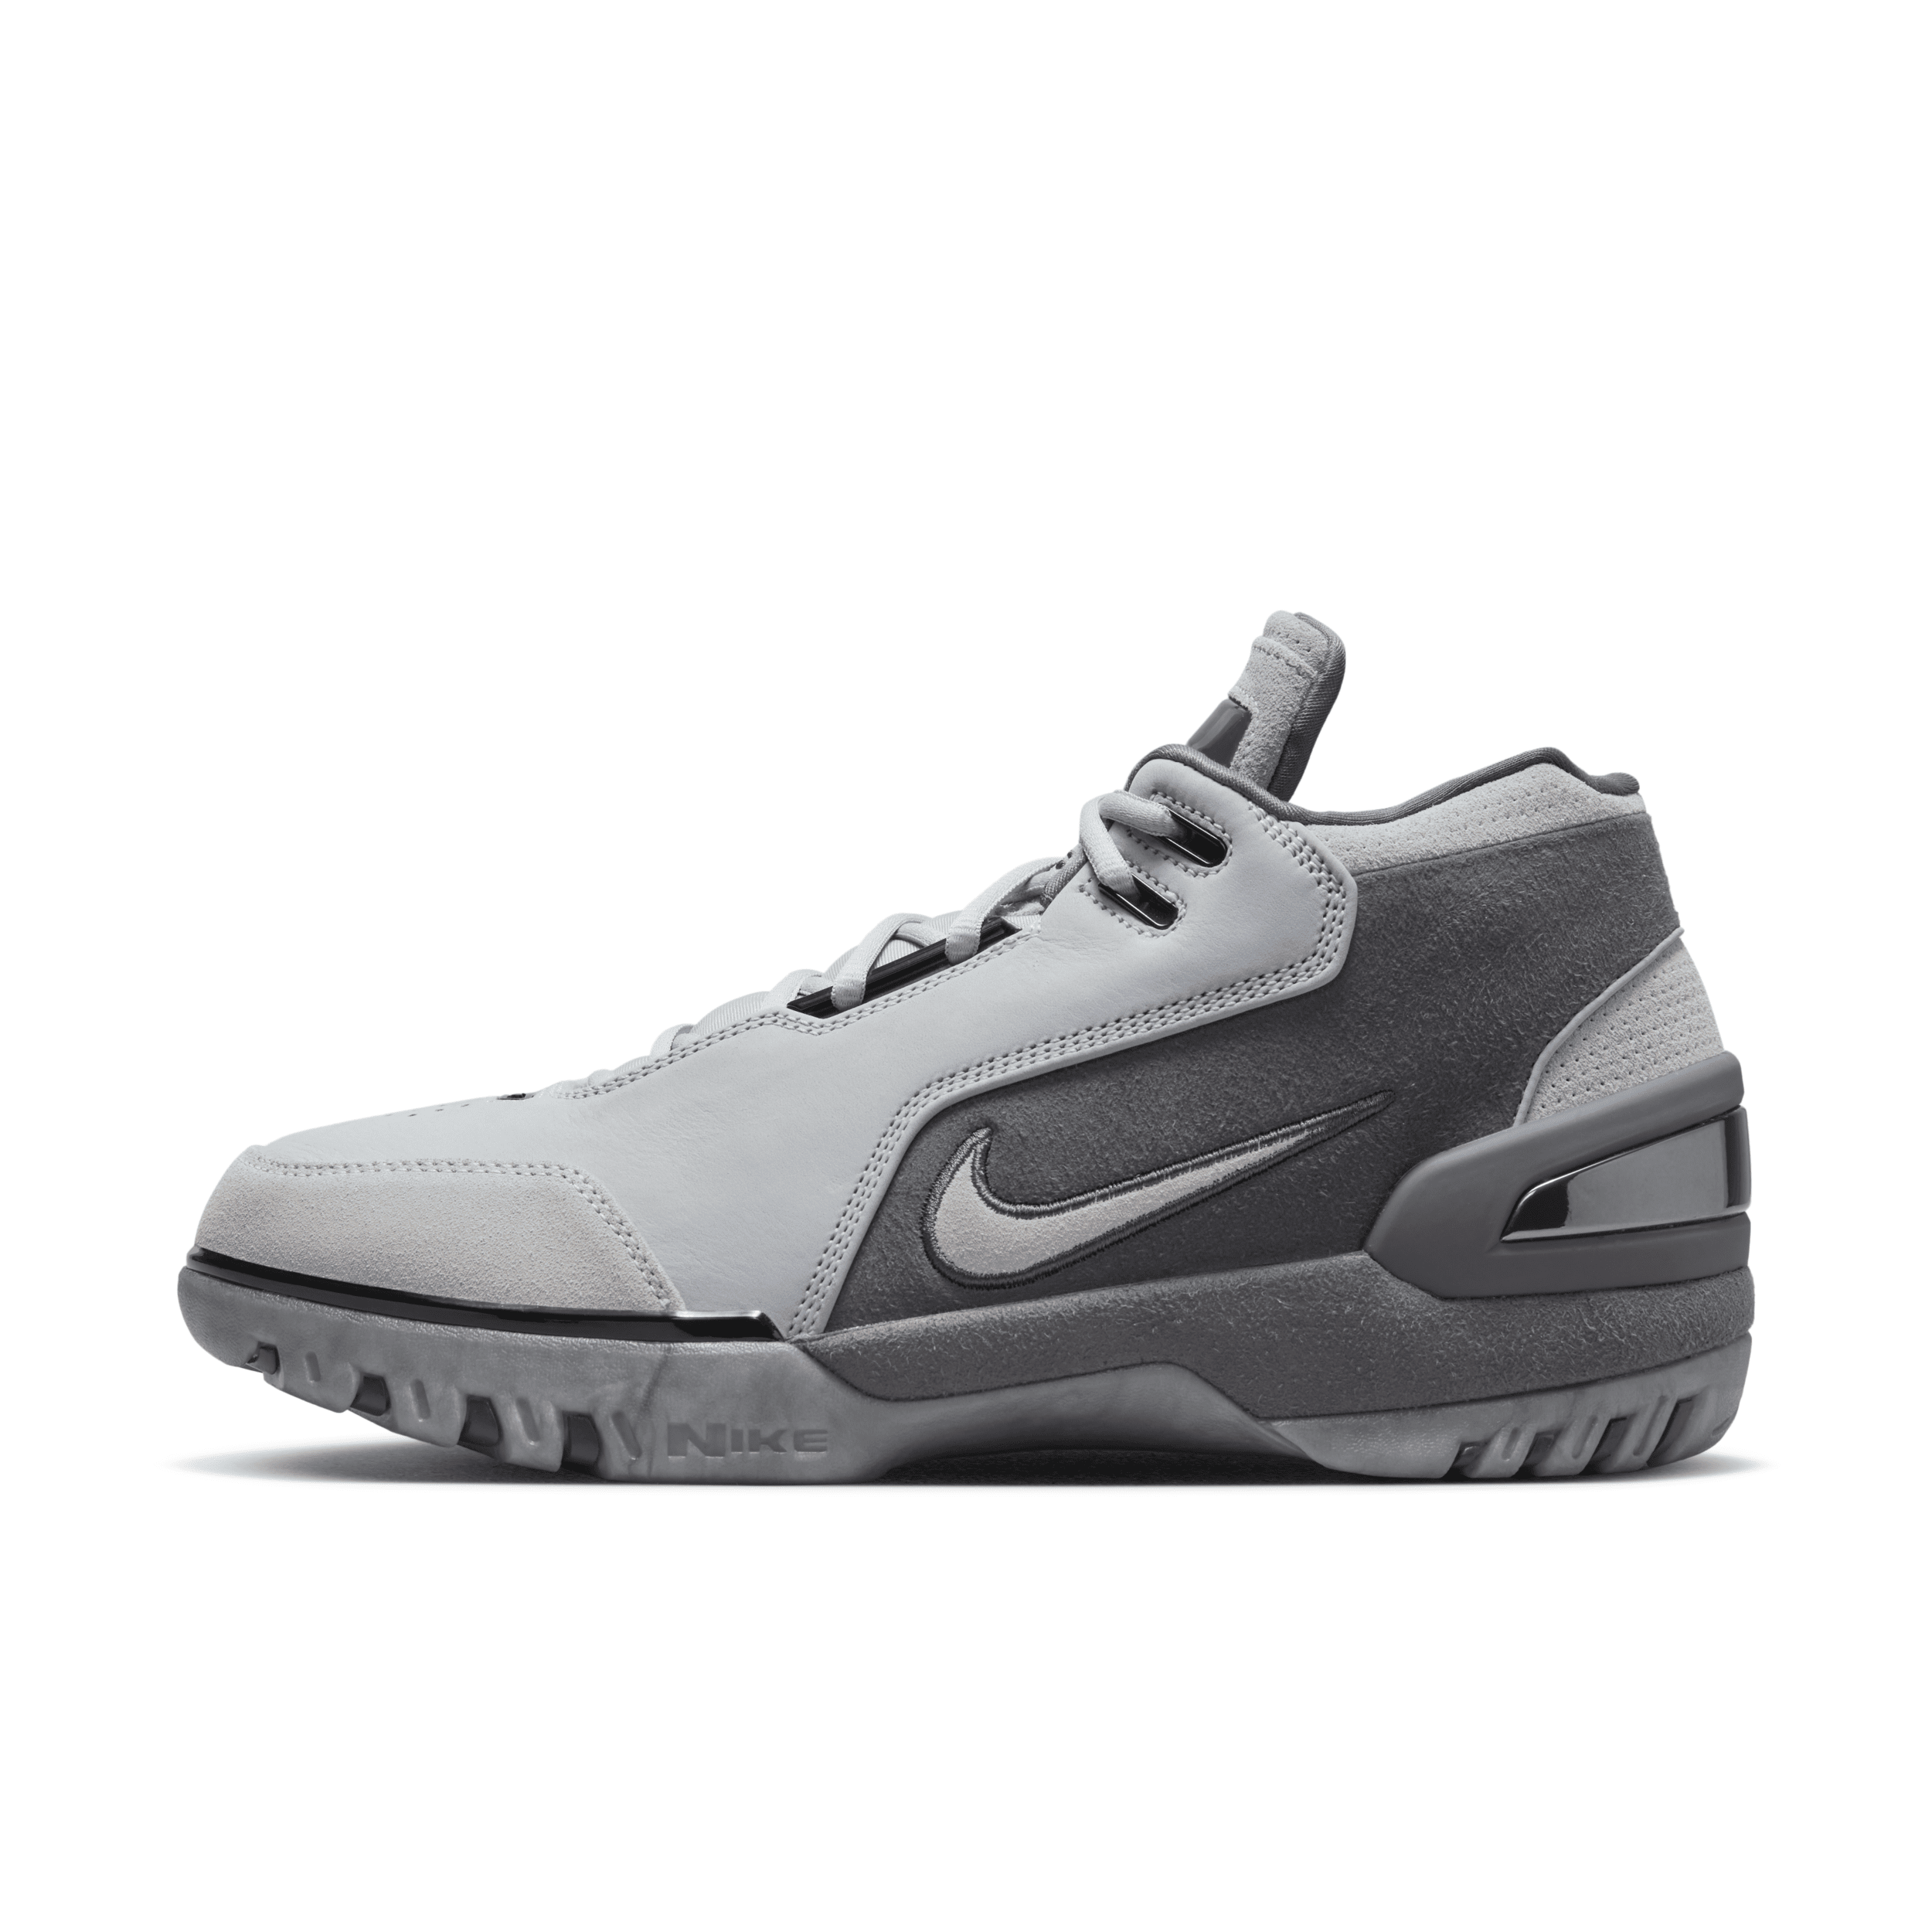 Nike Air Zoom Generation "dark Grey" Trainers